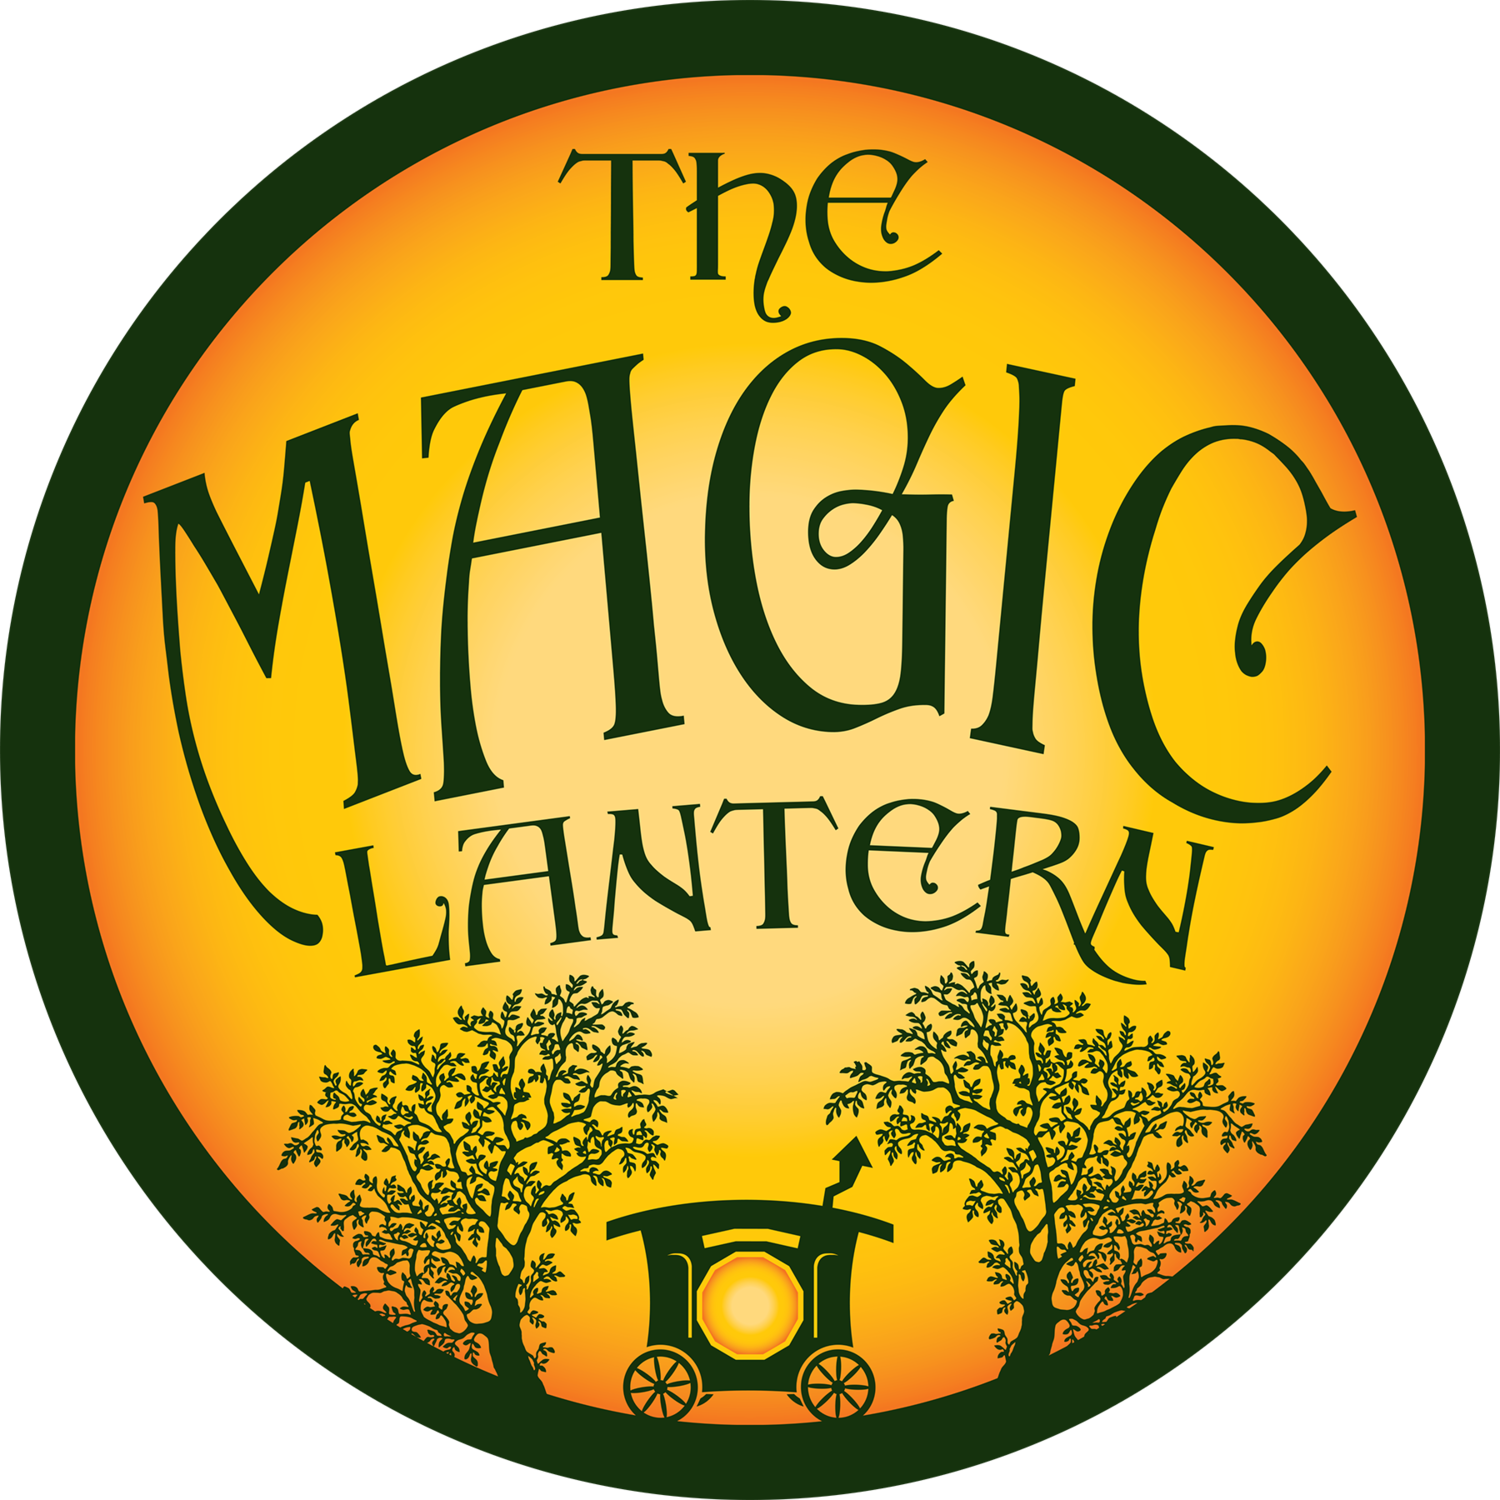 (c) The-magic-lantern.org